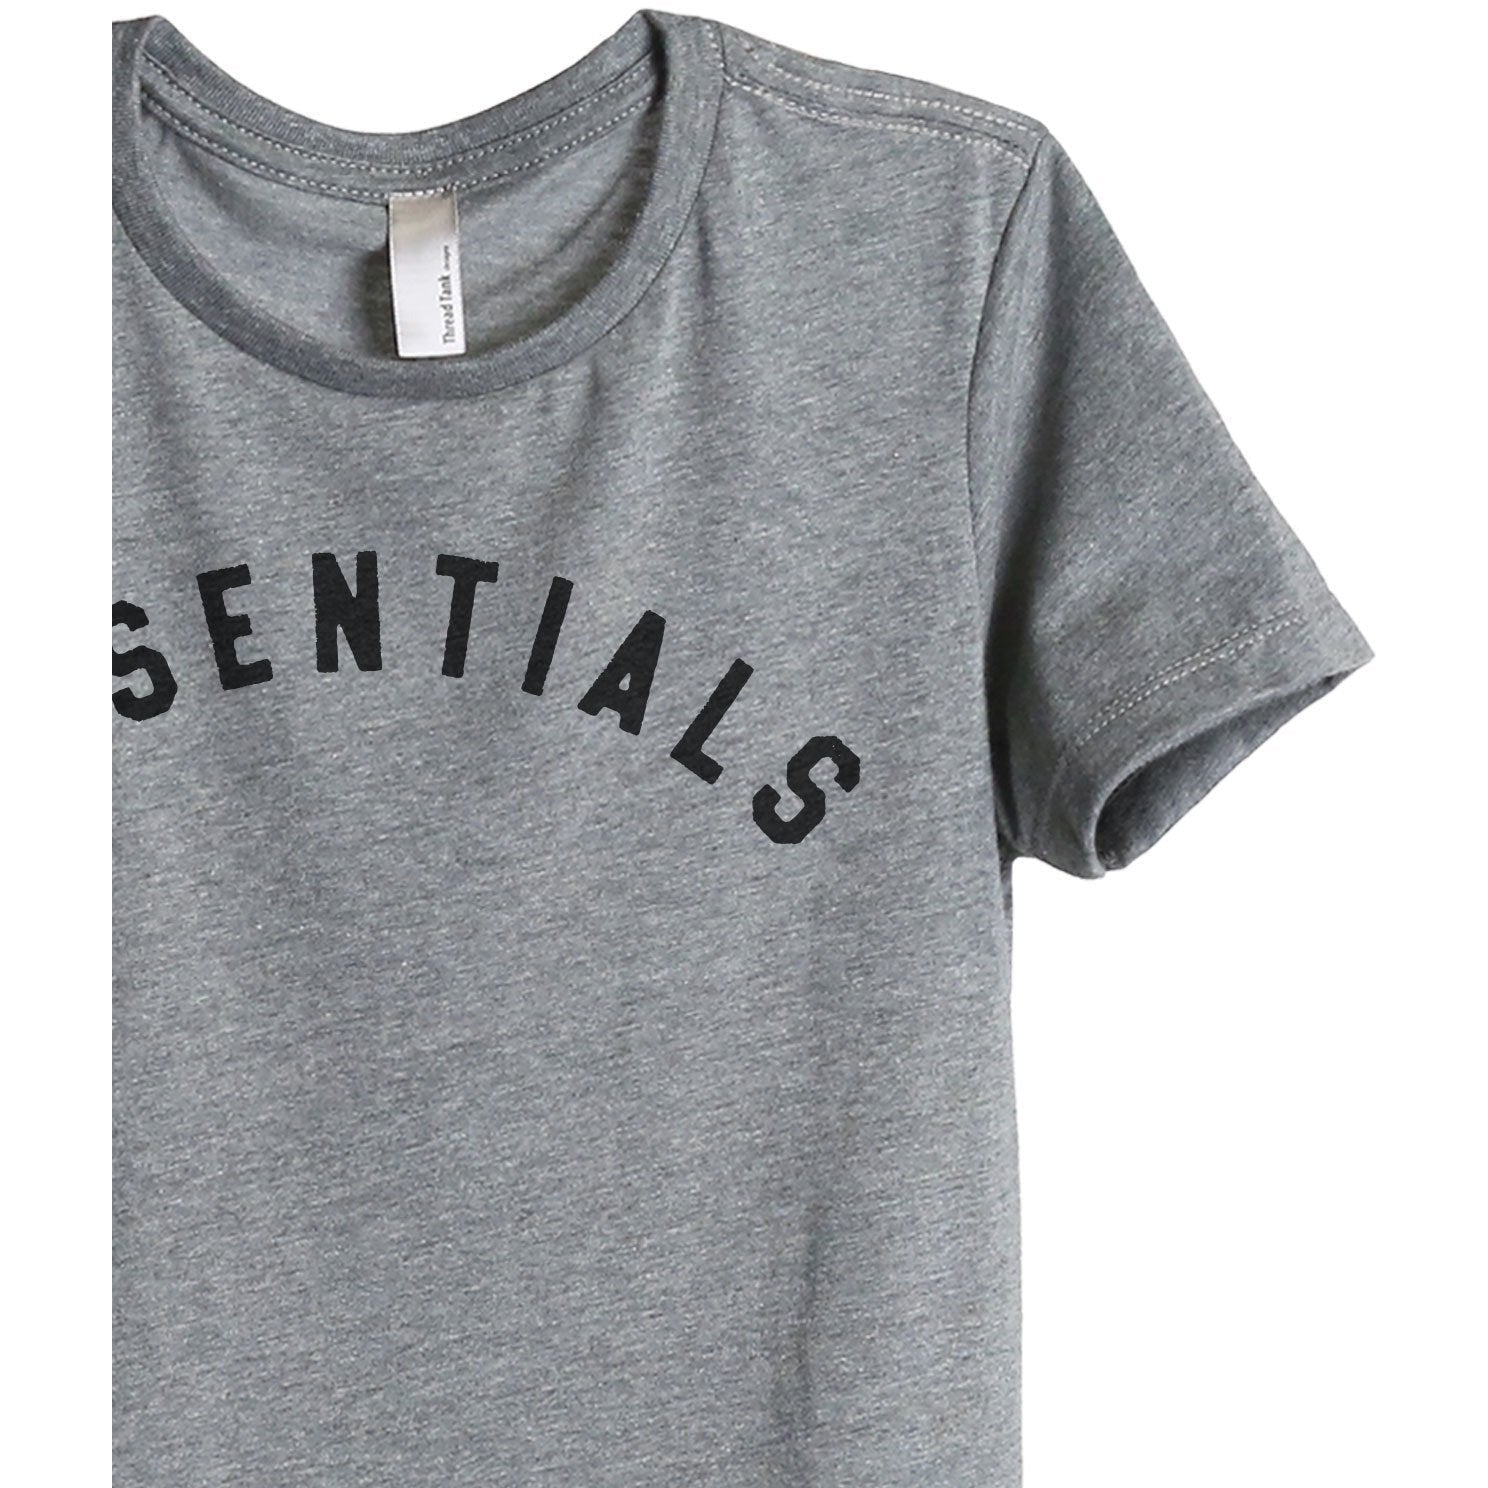 Essentials Women's Relaxed Crewneck T-Shirt Top Tee Heather Grey Zoom Details
